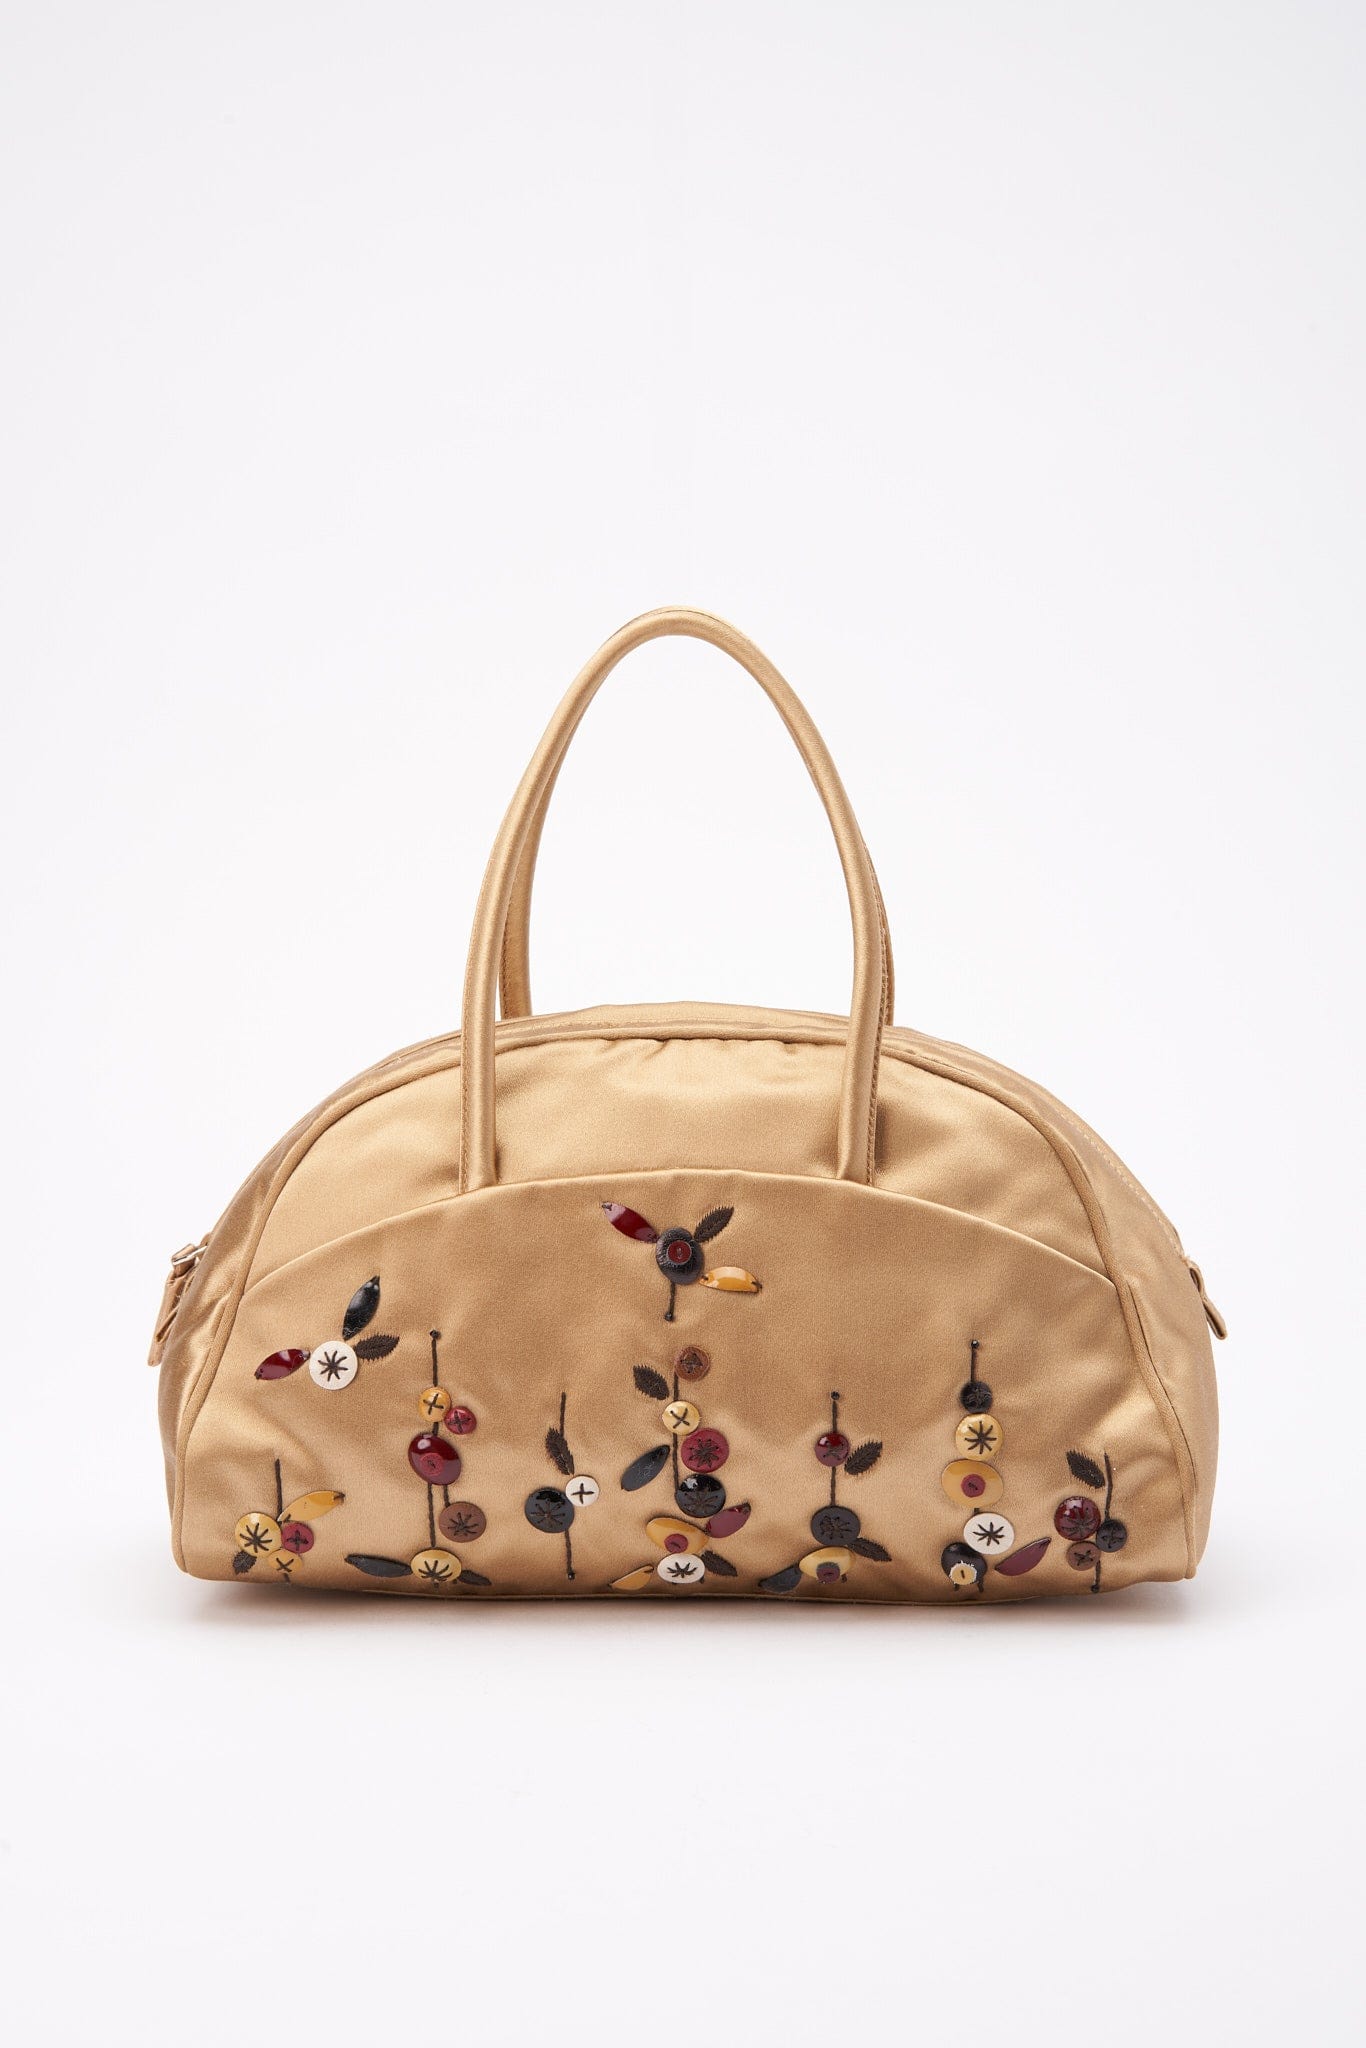 Vintage Prada Satin Bag With Embroidery Flowers